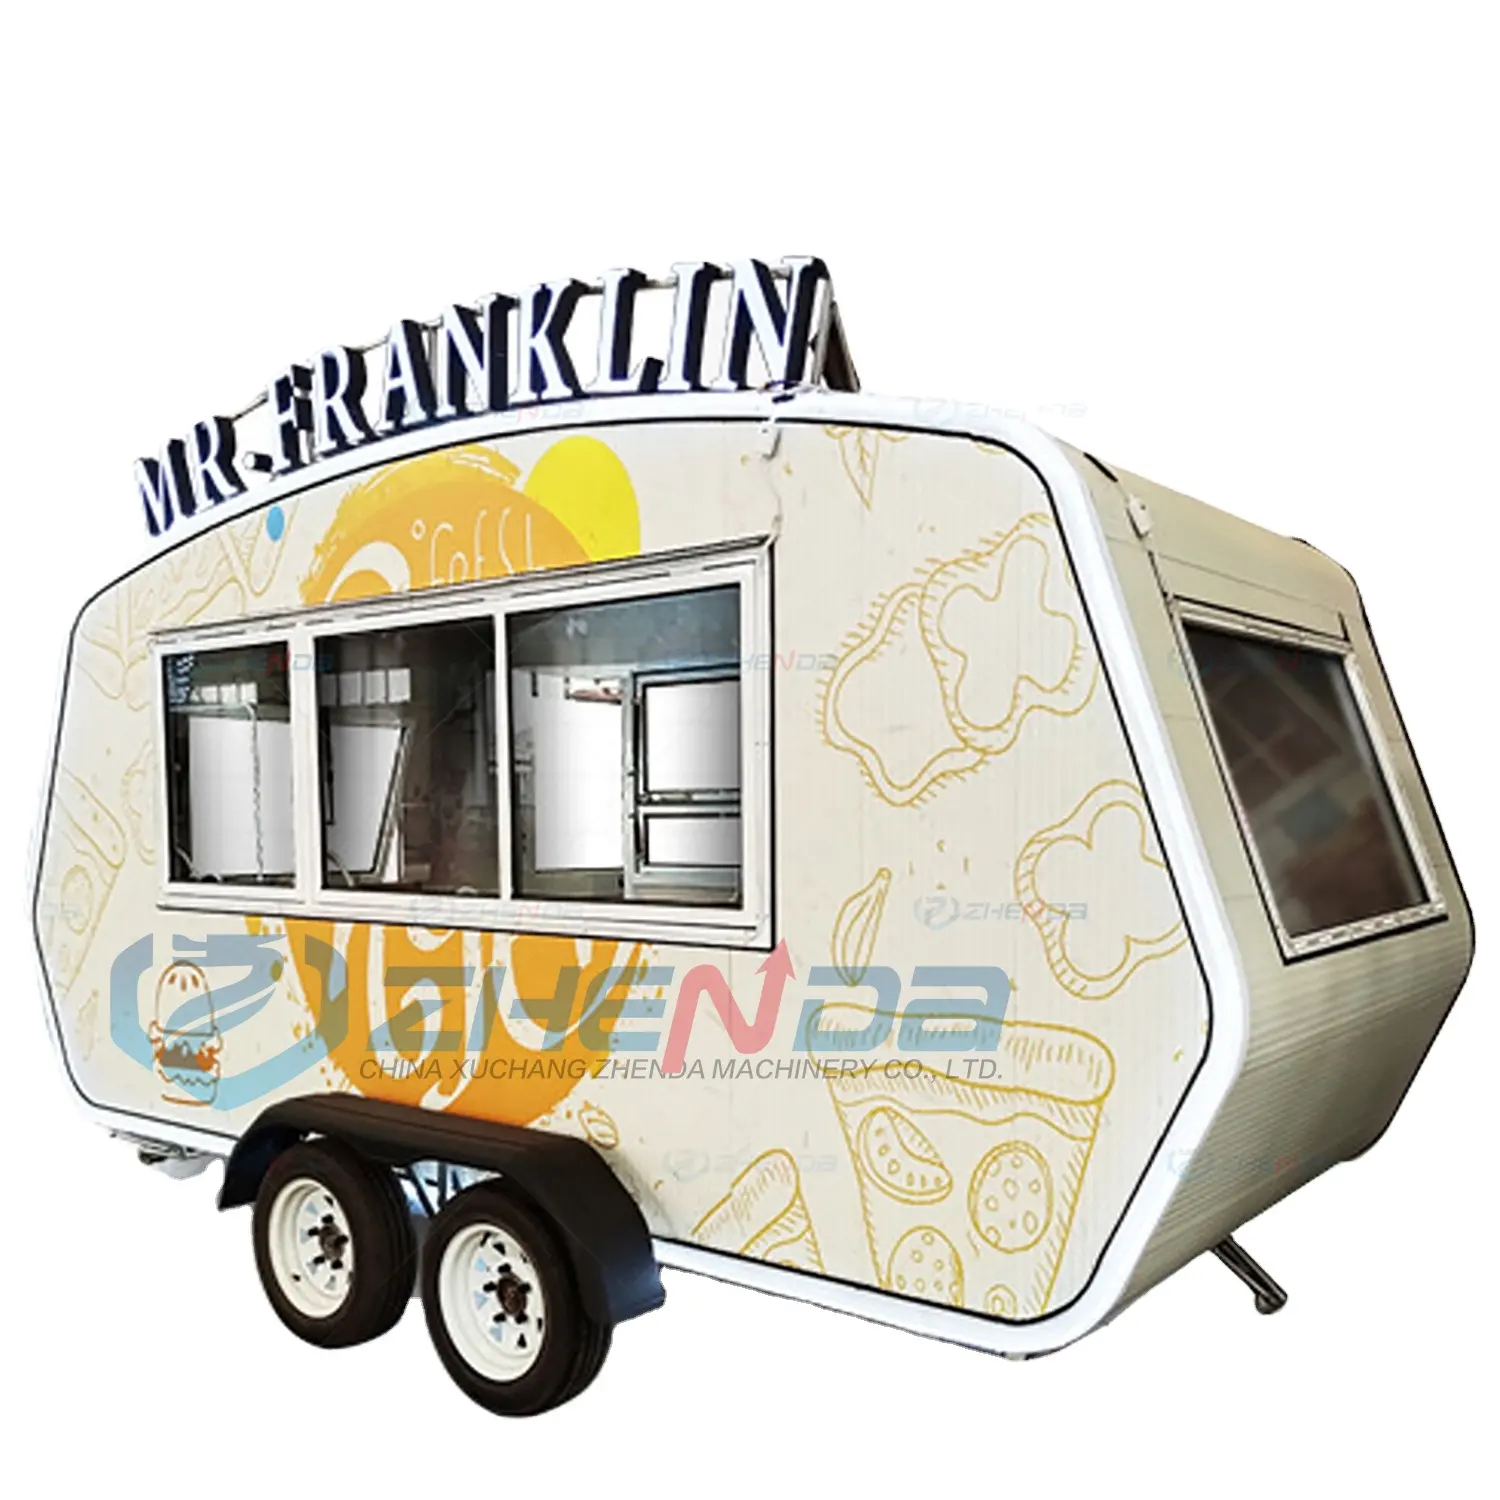 मध्यम-आकार सड़क मोबाइल फास्ट फूड ट्रेलर आउटडोर बारबेक्यू पोर्च फूड की दुकान के साथ गाड़ी खाद्य ट्रक